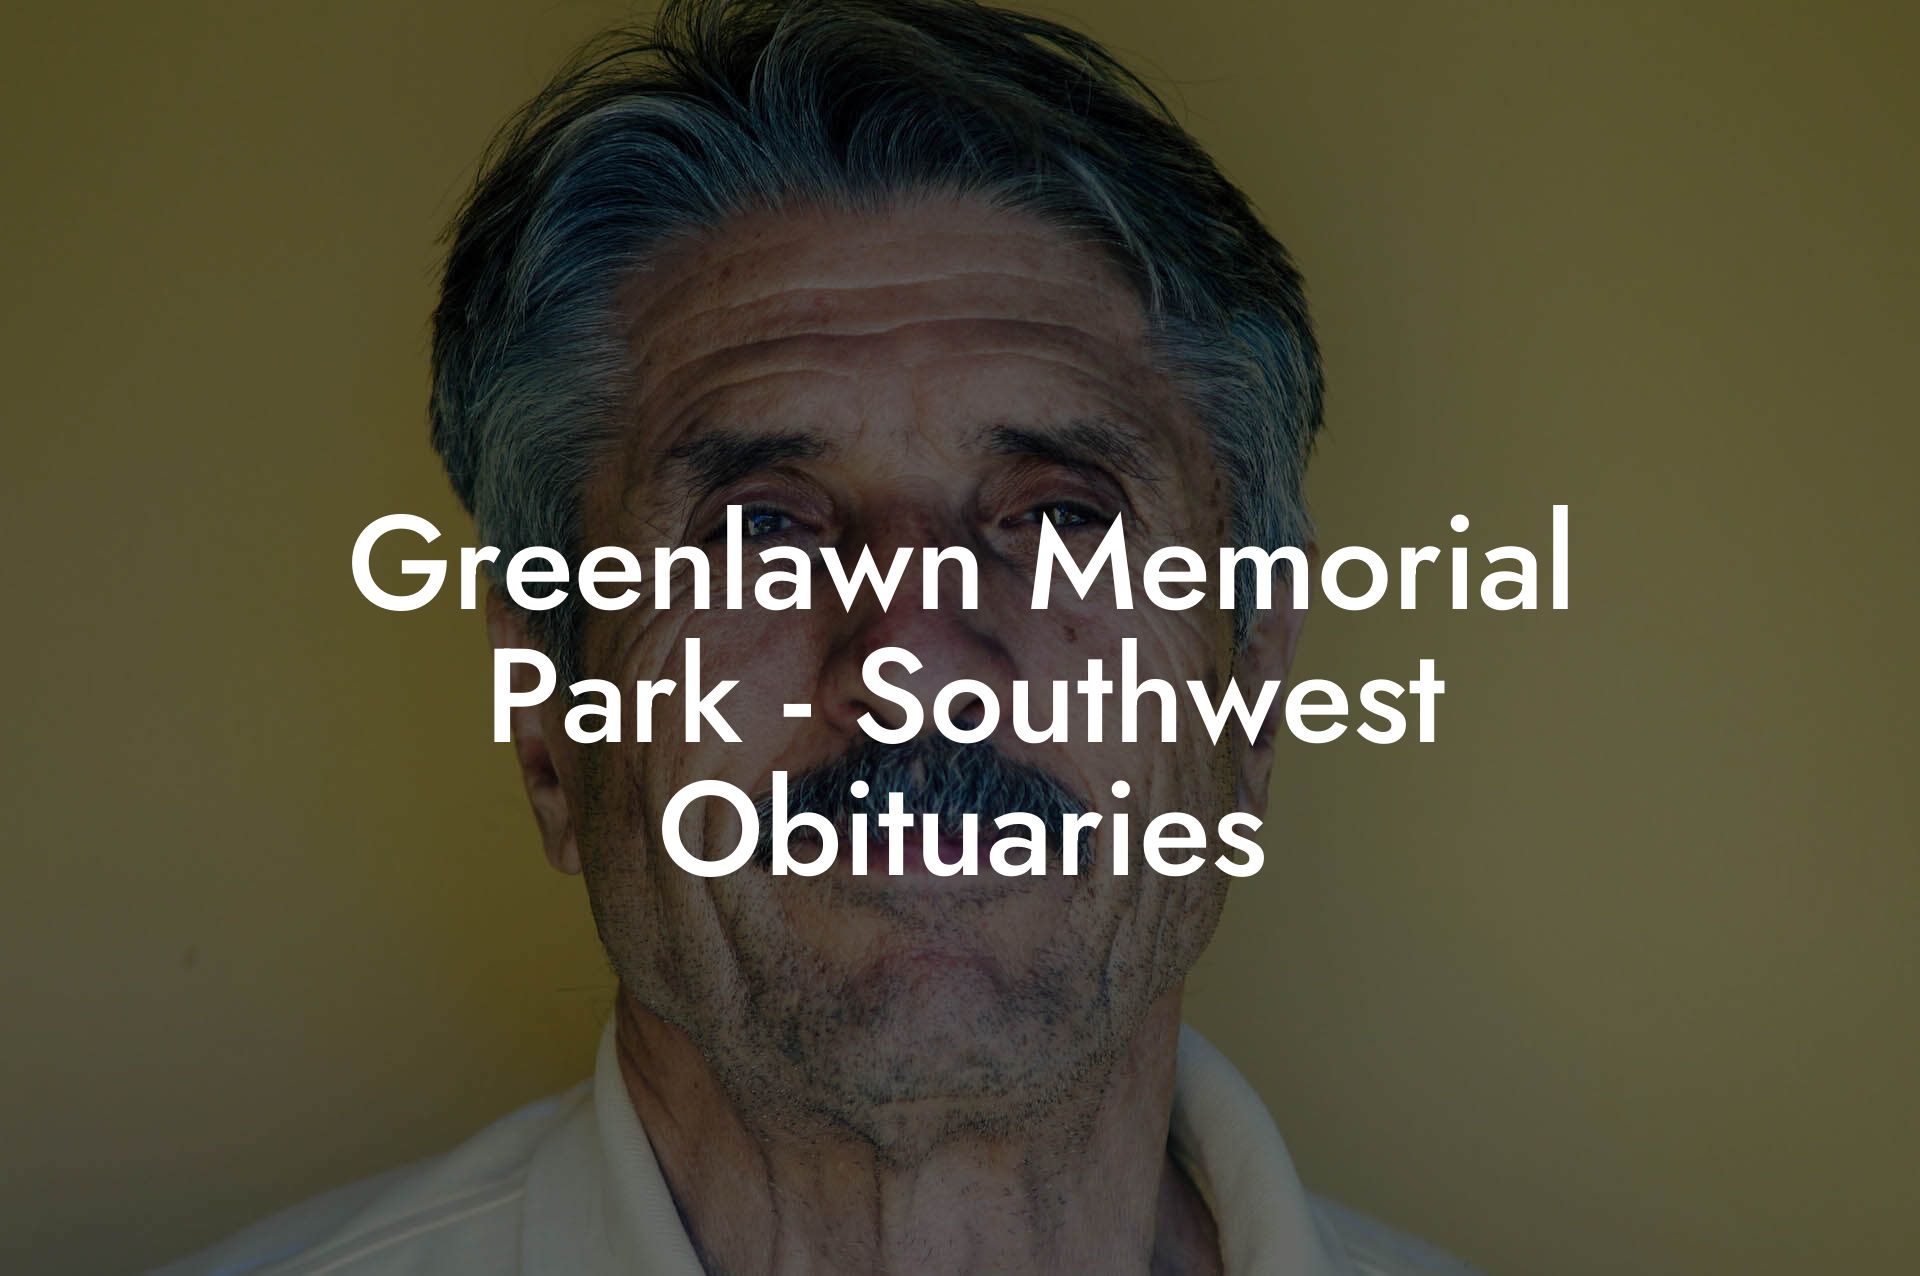 Greenlawn Memorial Park - Southwest Obituaries